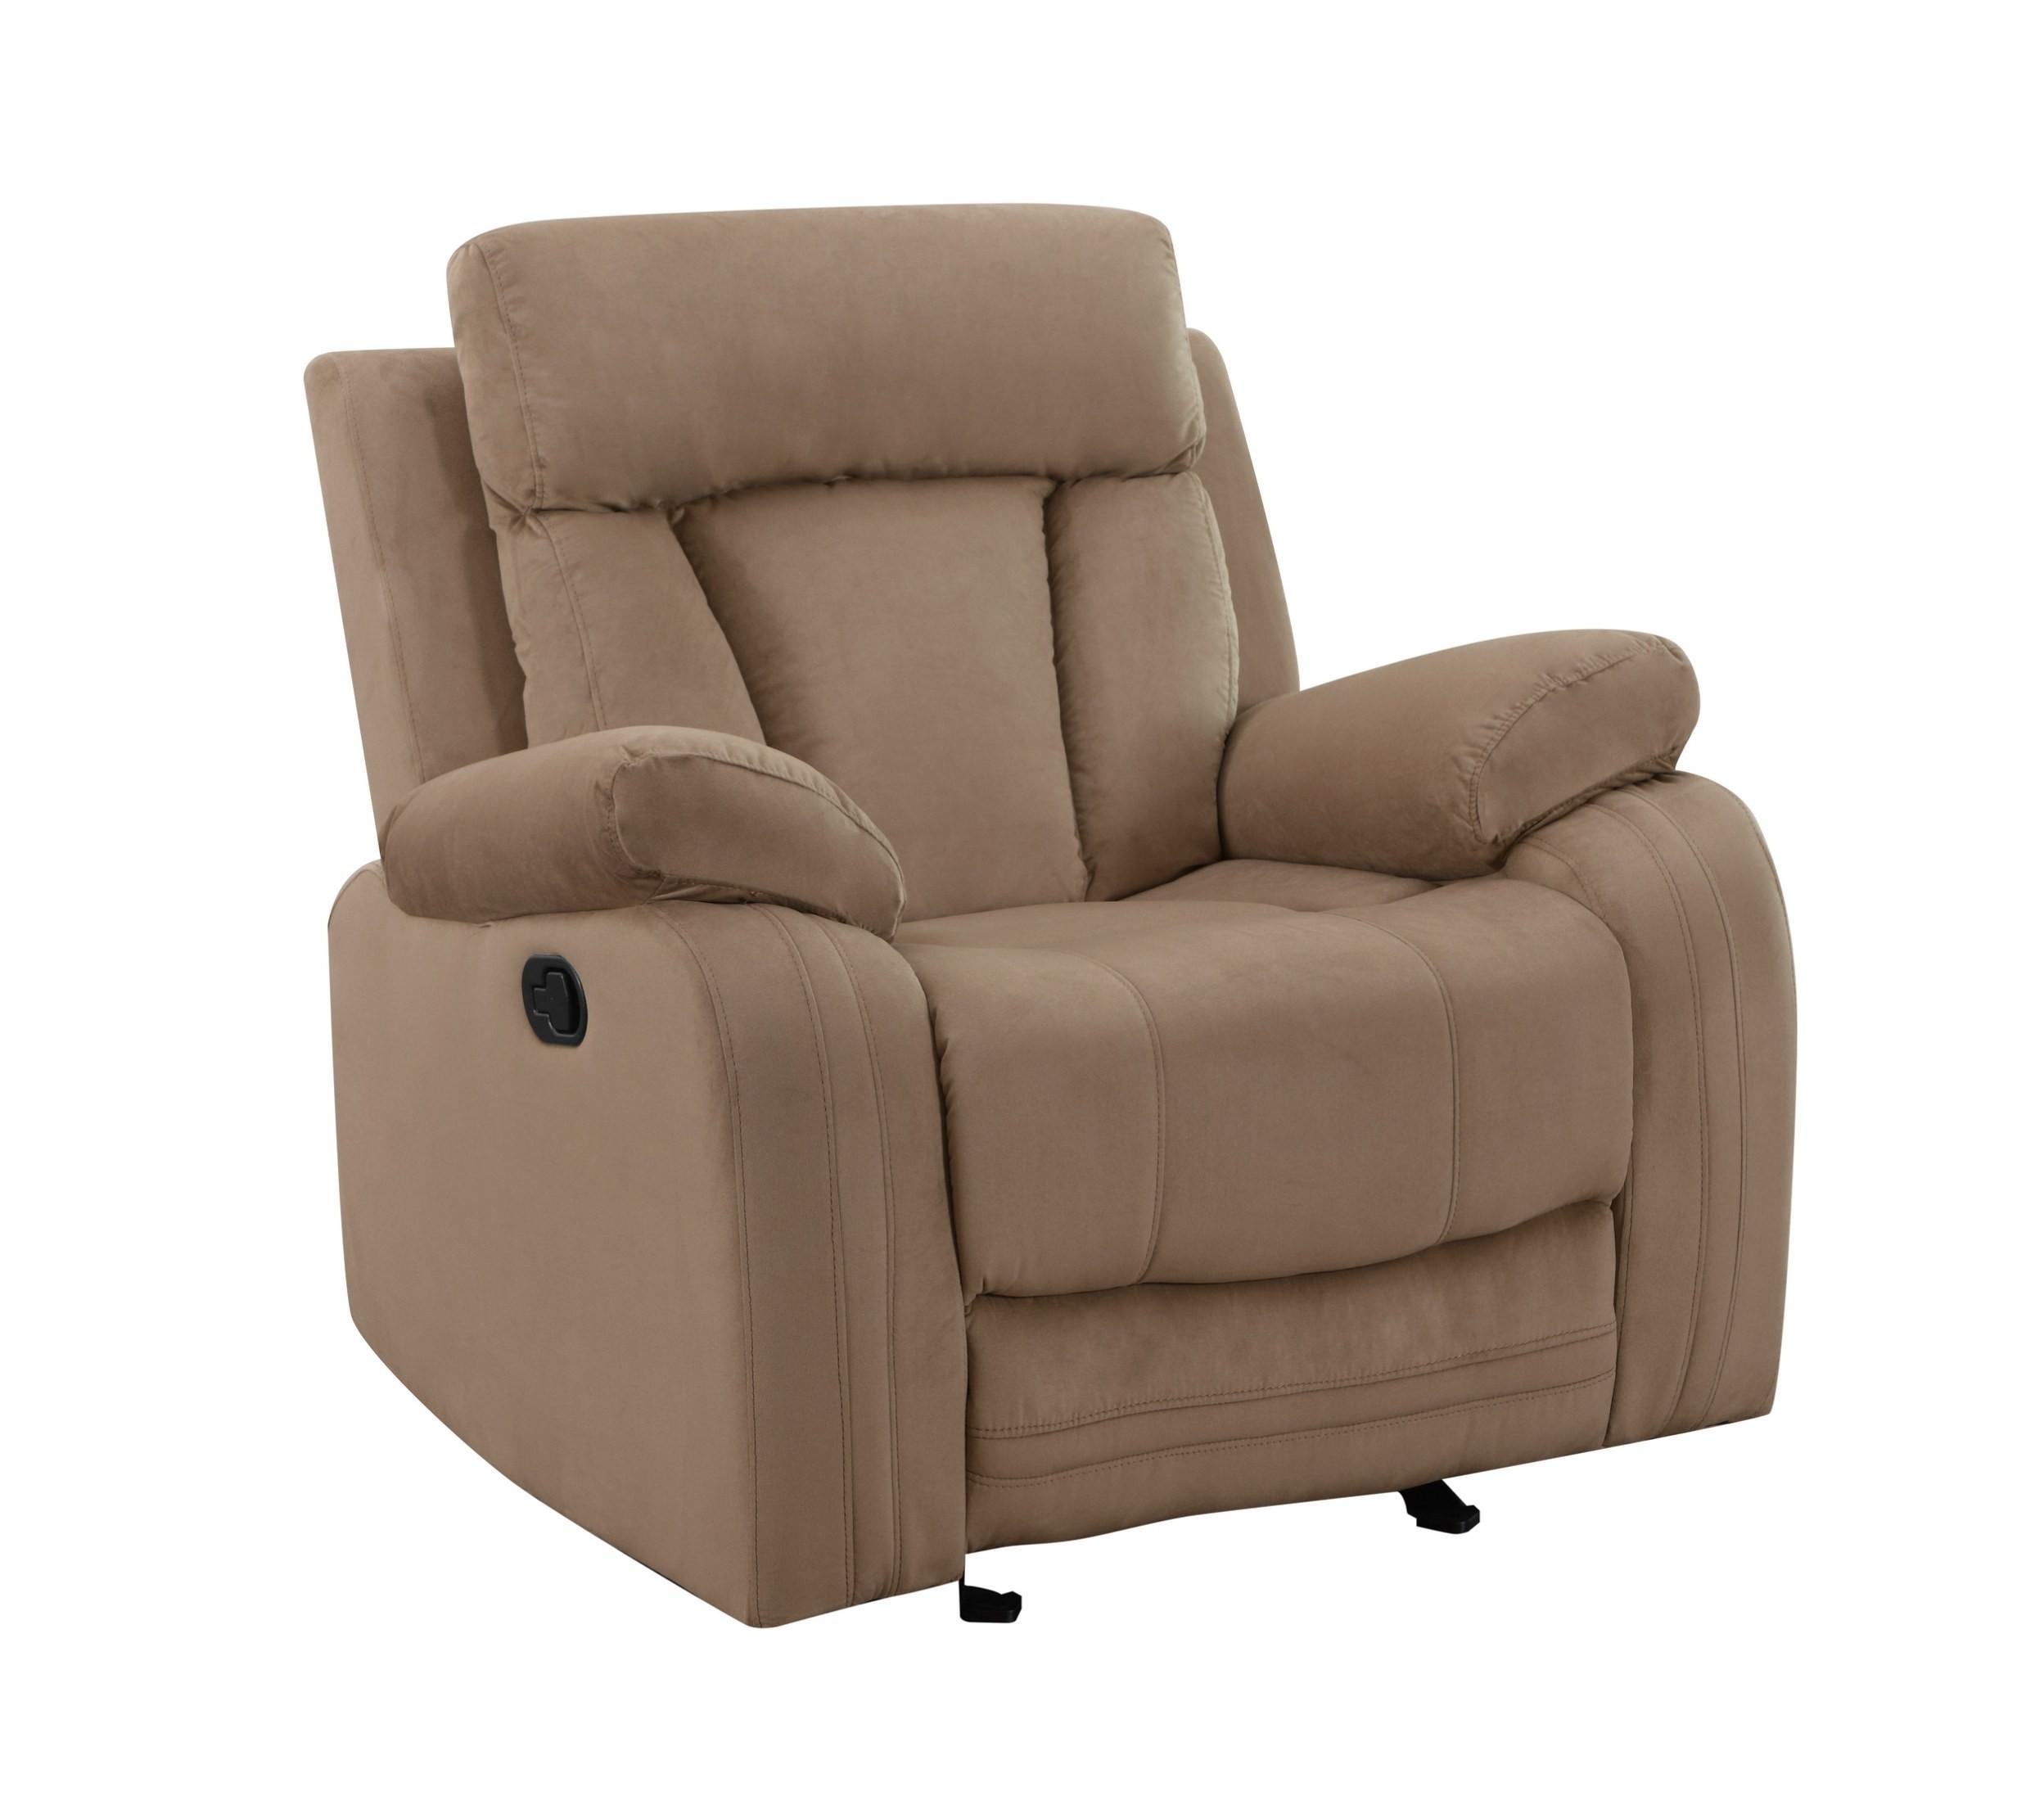 Contemporary Recliner Chair 9760 9760-BEIGE-CH in Beige Microfiber